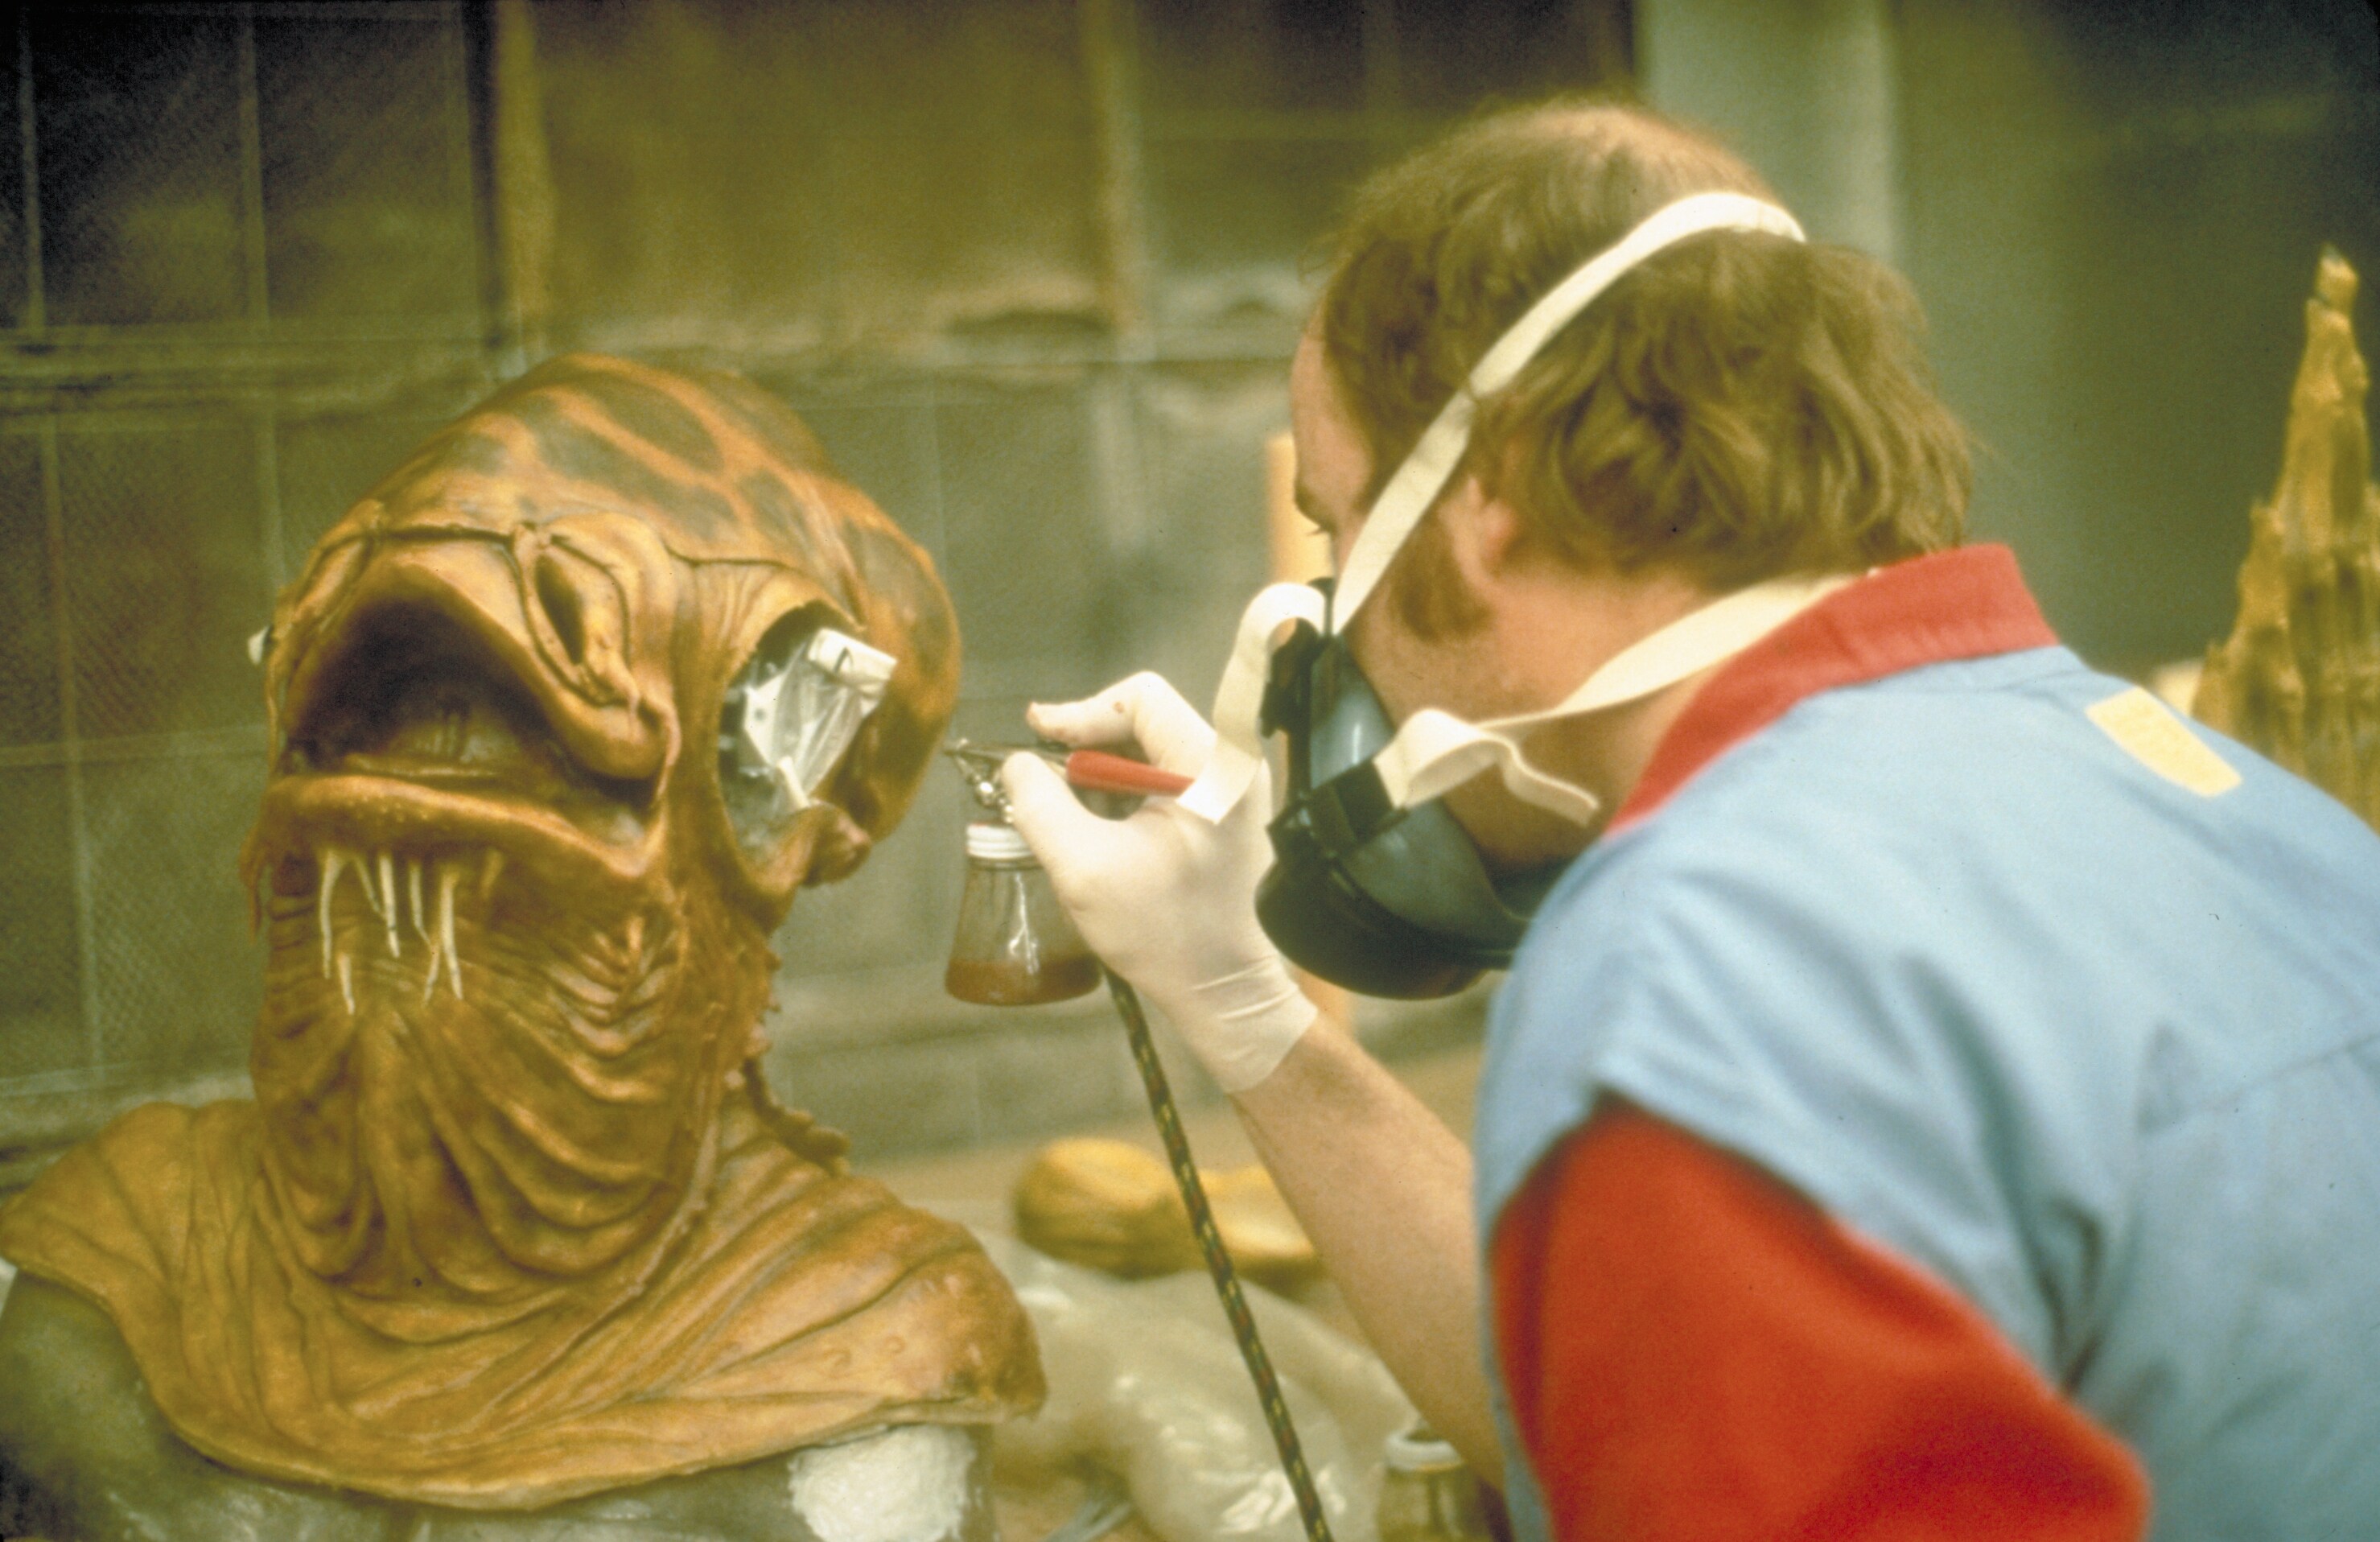 a man airbrushing a mask of an alien